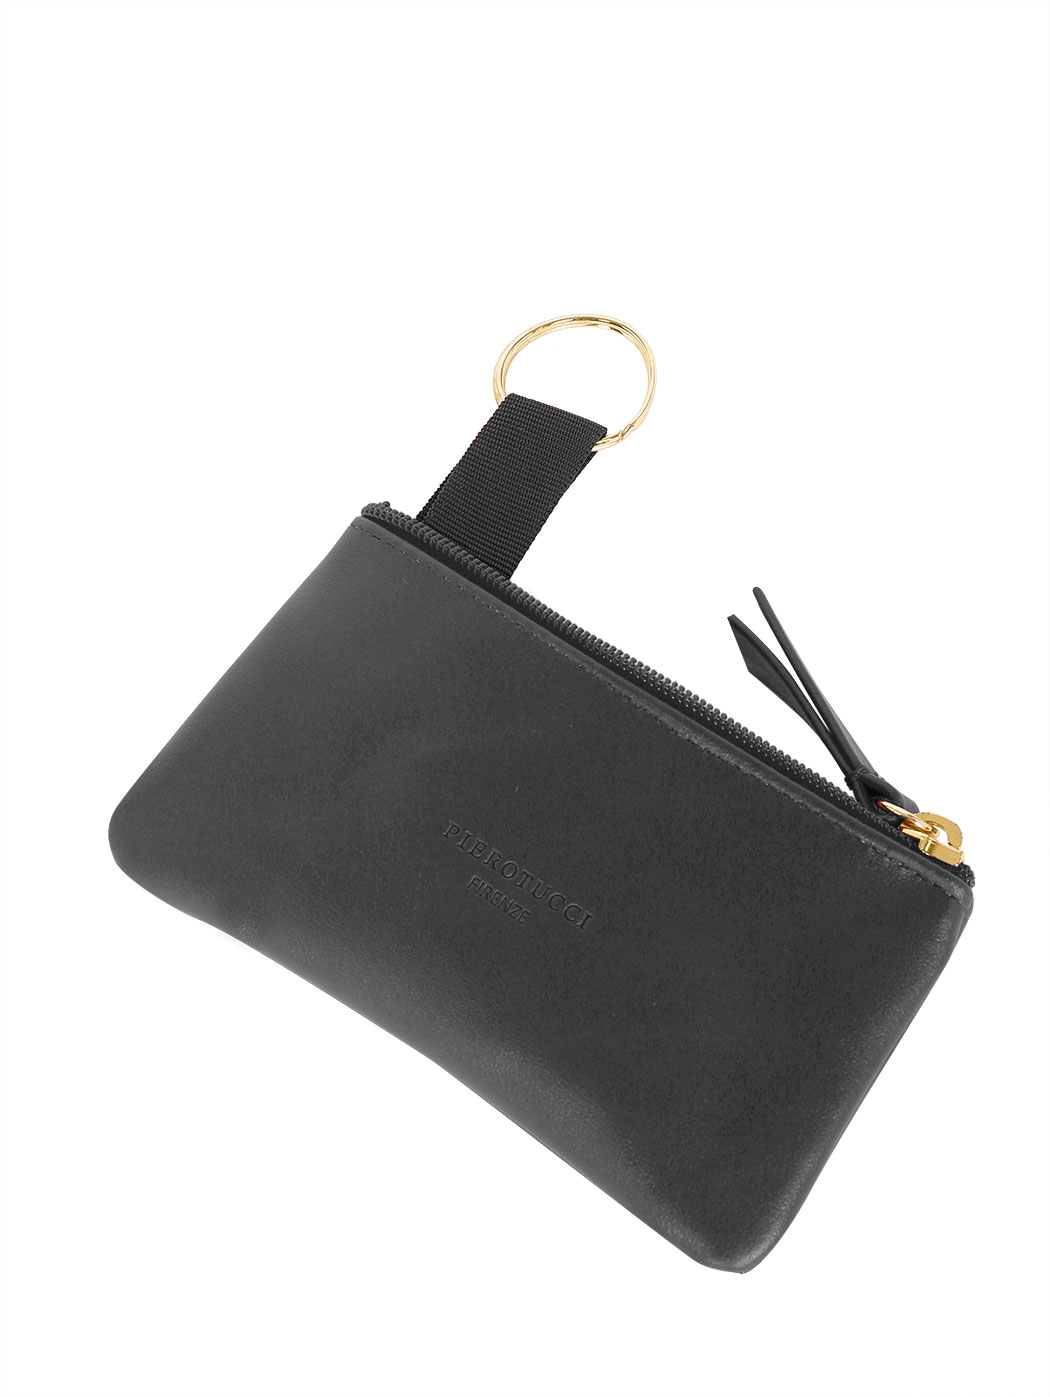 Genuine Leather Wallet Car Key Holder Case Keychain Bag Pouch Zip Organizer  Bag | eBay